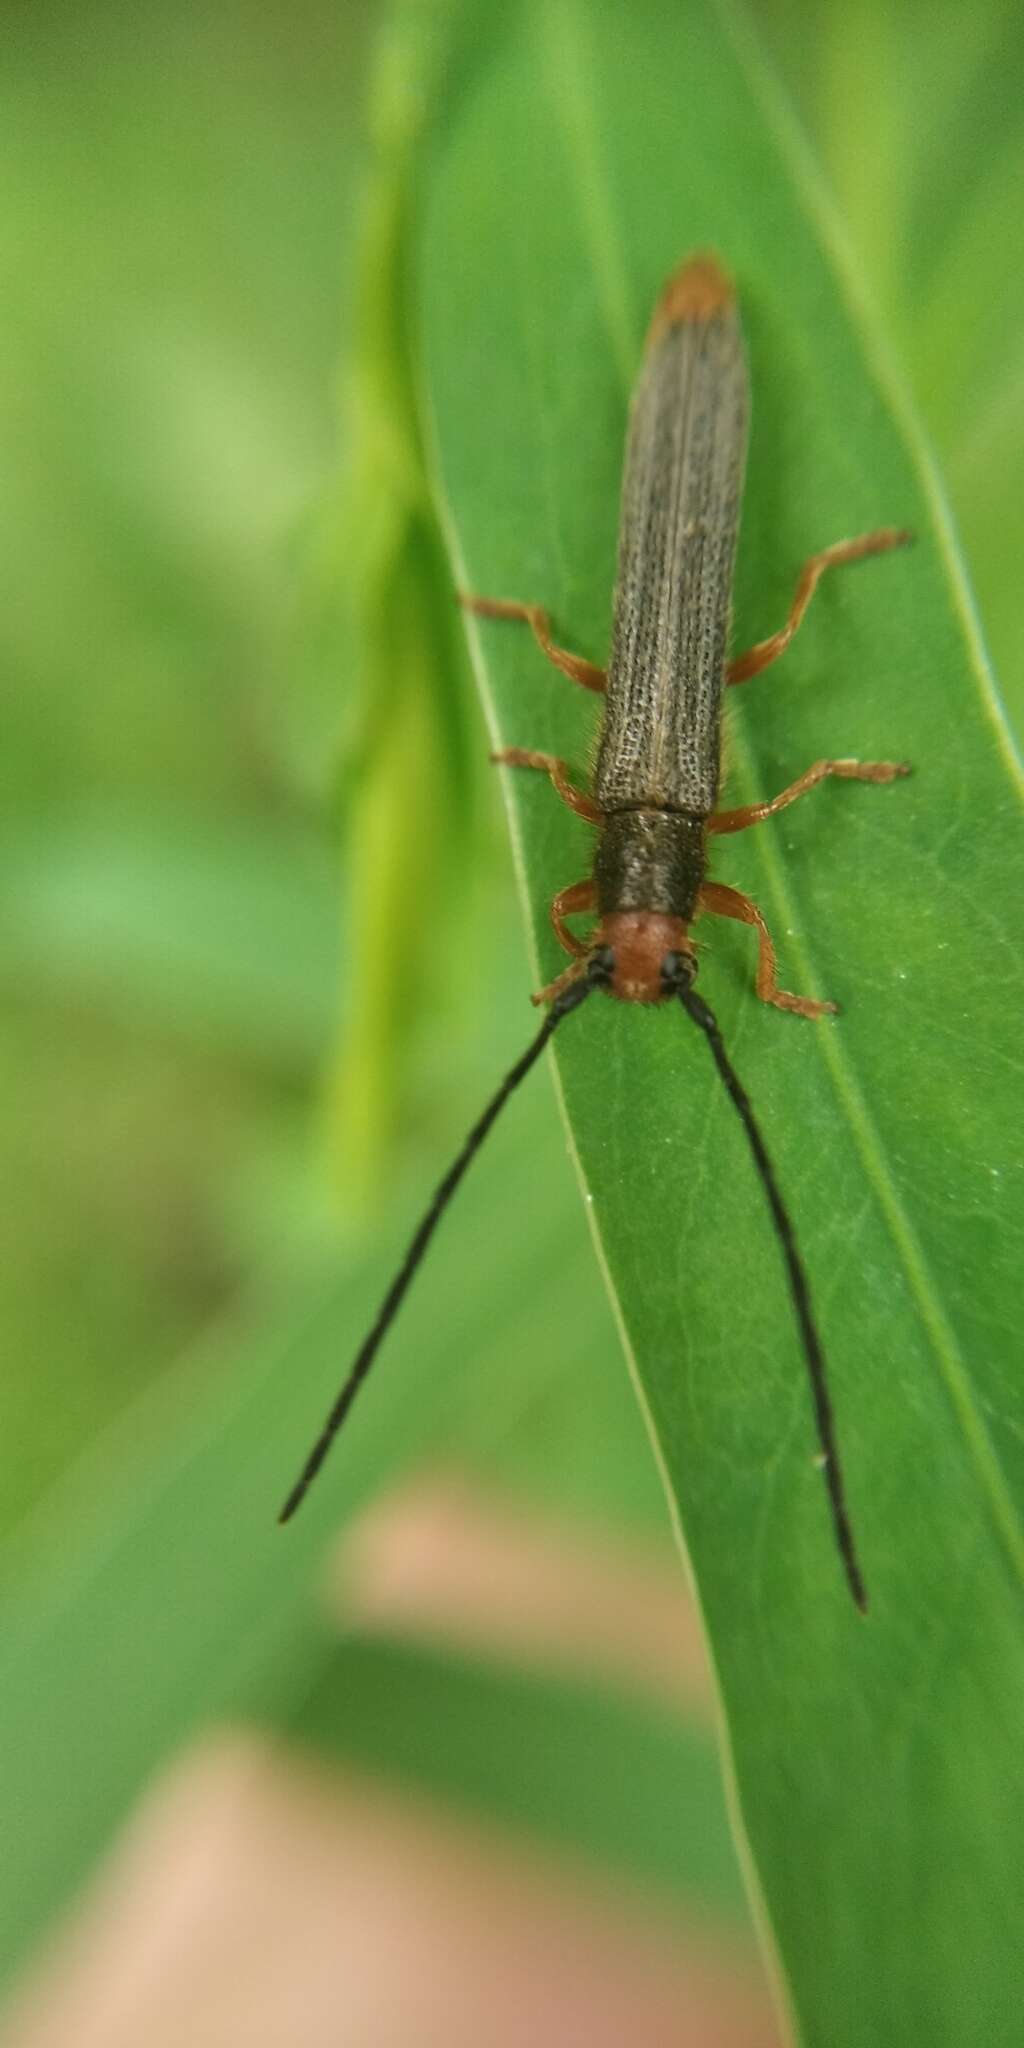 Image of Leafy Spurge Stem Boring Beetle